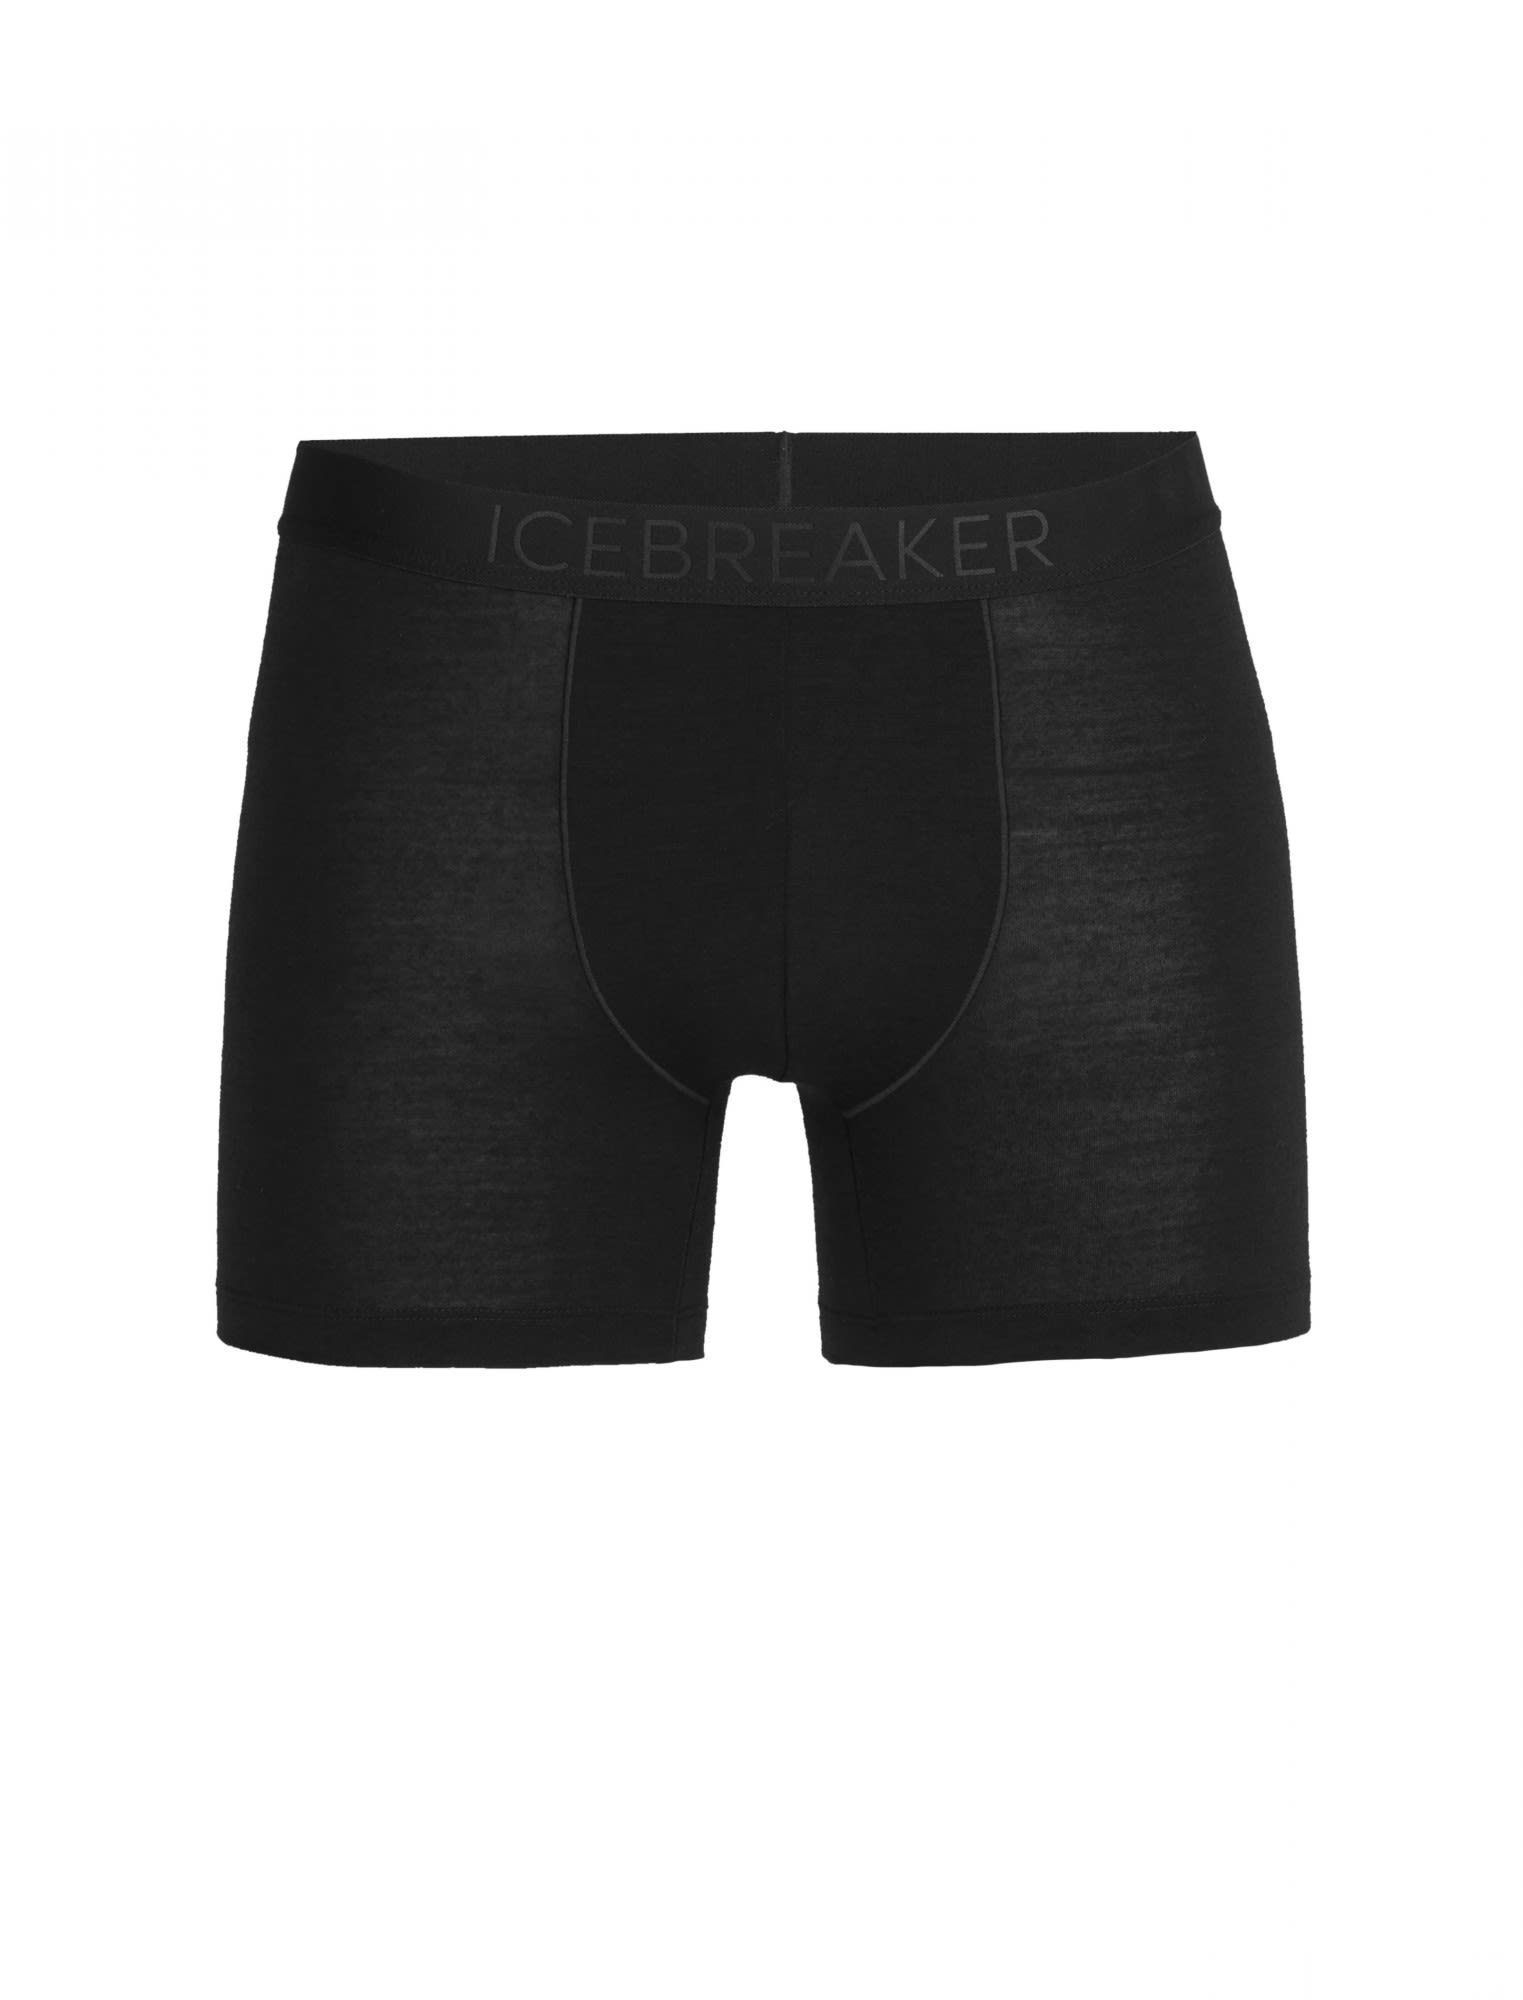 Icebreaker M Anatomica Boxers Unterhose Herren Icebreaker Cool-lite Black Lange